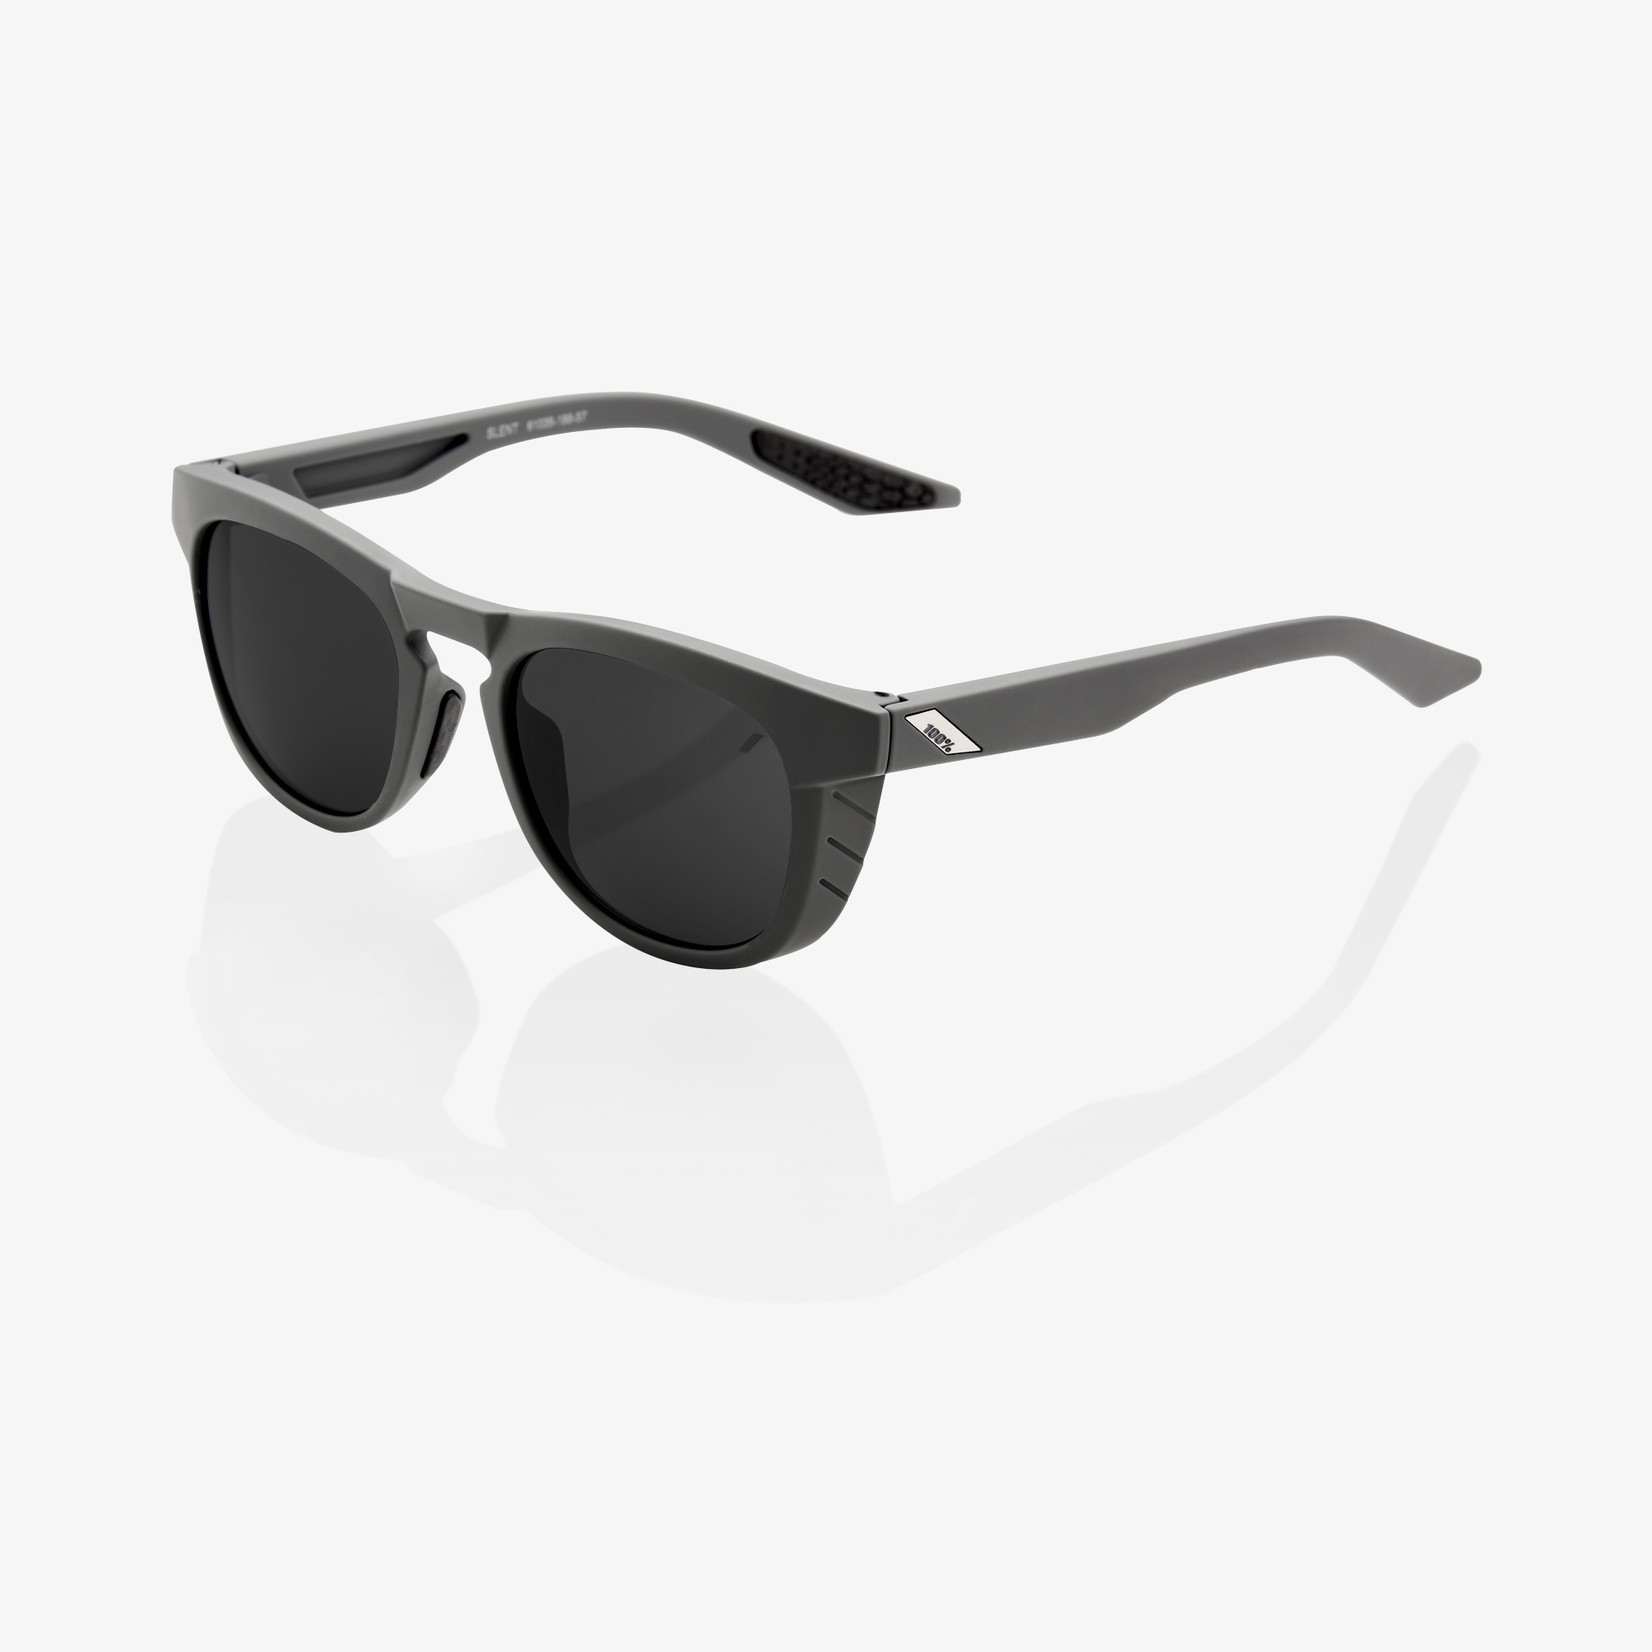 100 Percent 100% Slent 100% UV Protection Bike Sunglasses Soft Tact Cool Grey - Smoke